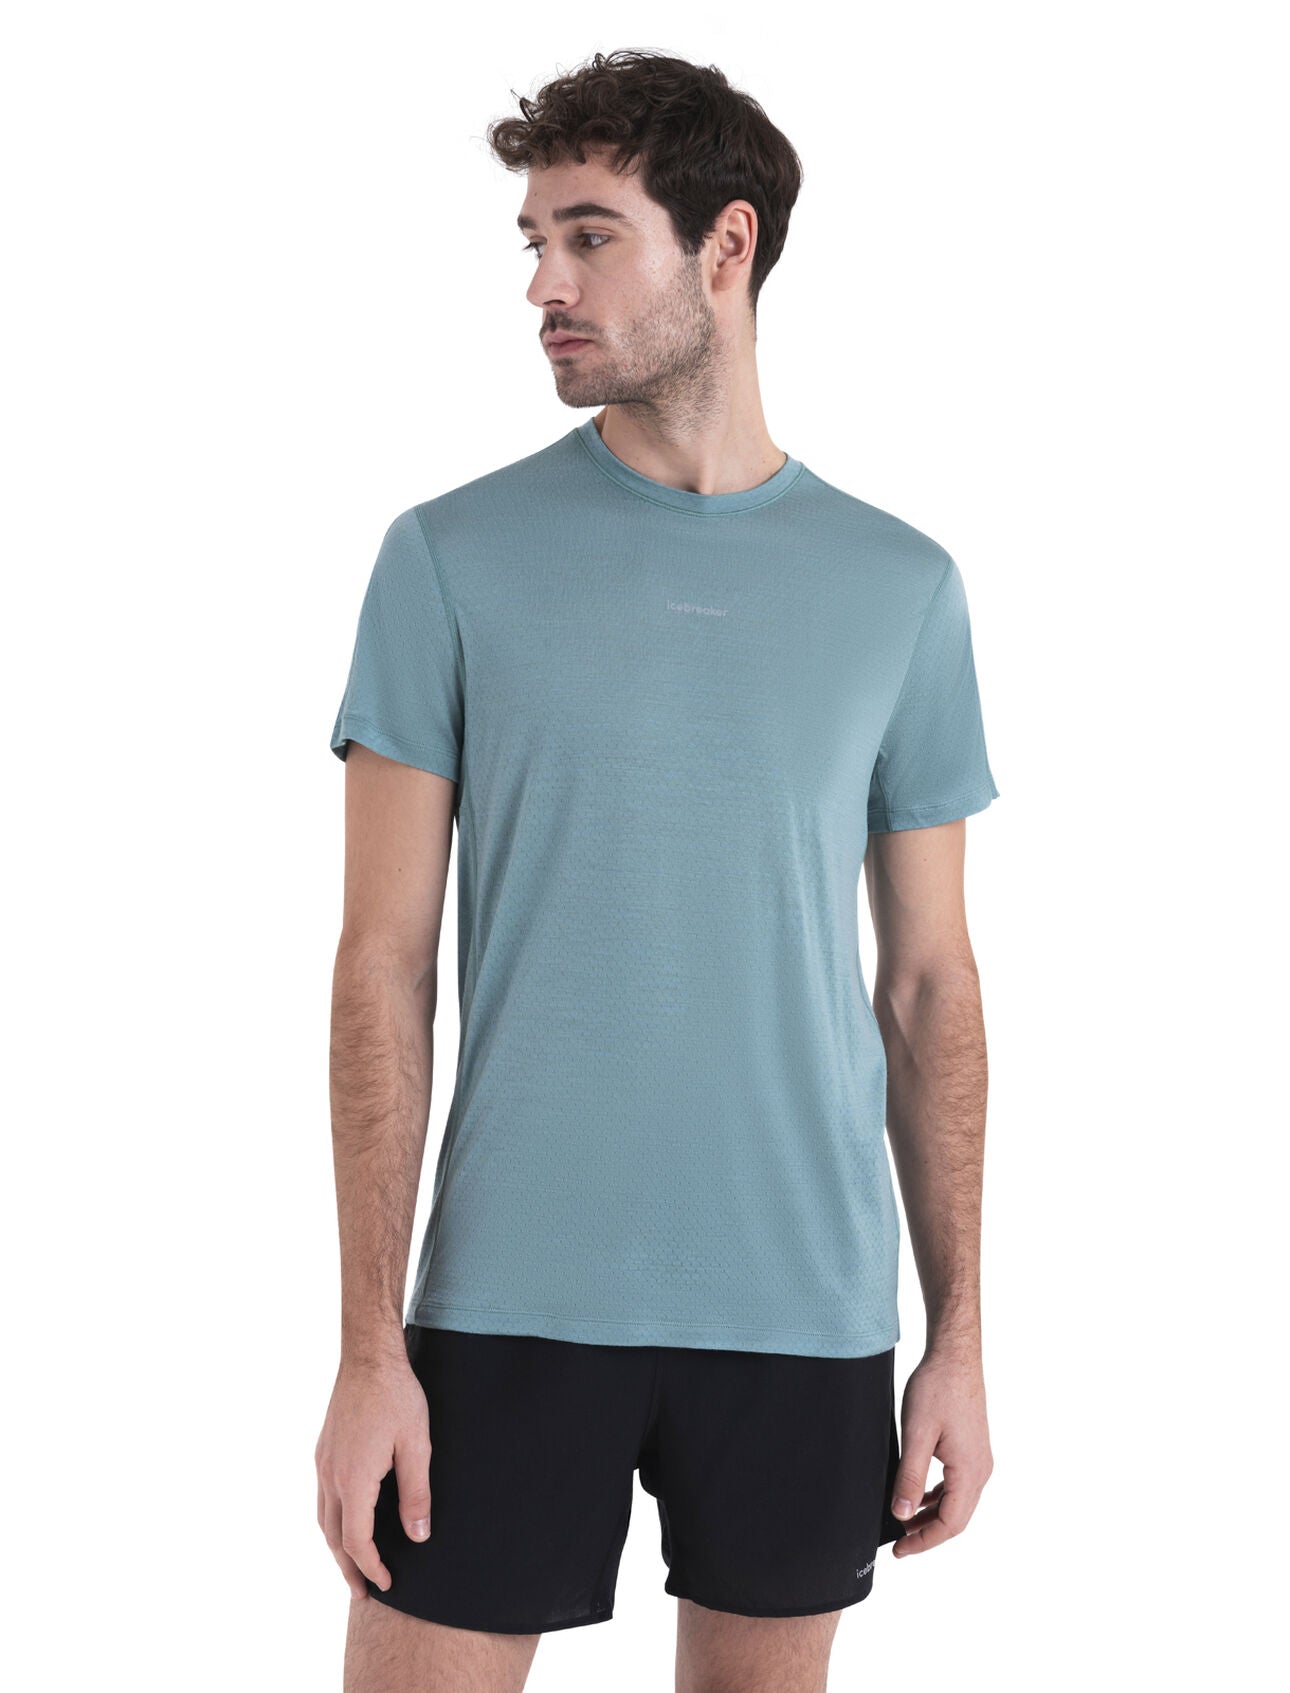 Men's 125 Cool-Lite Merino Blend Speed T-Shirt